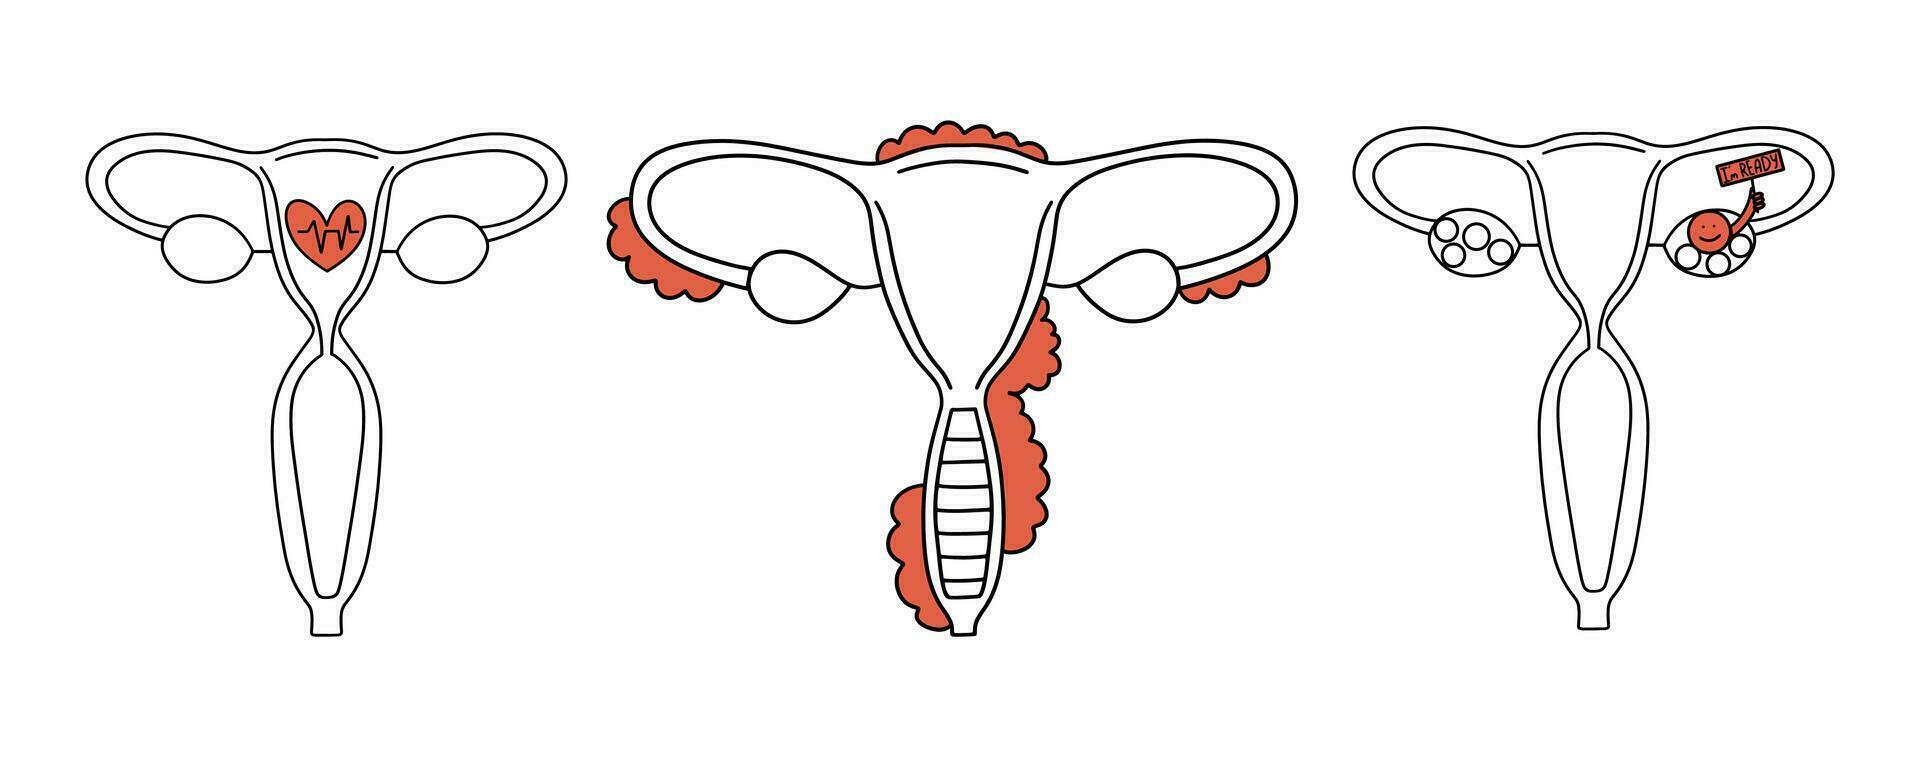 Female uterus set, ovulation. Vector illustration outline style.